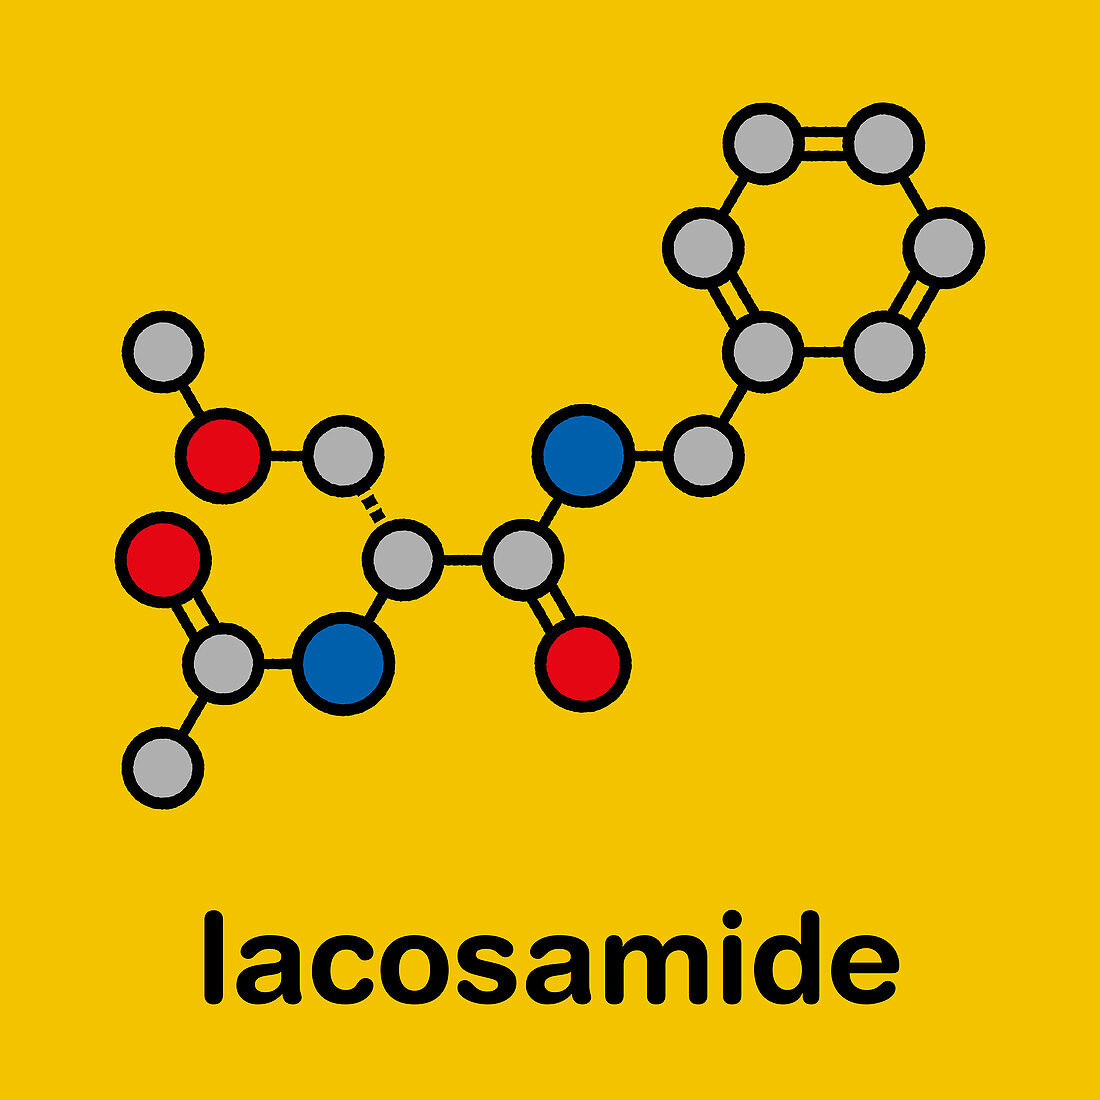 Lacosamide anticonvulsant drug molecule, illustration